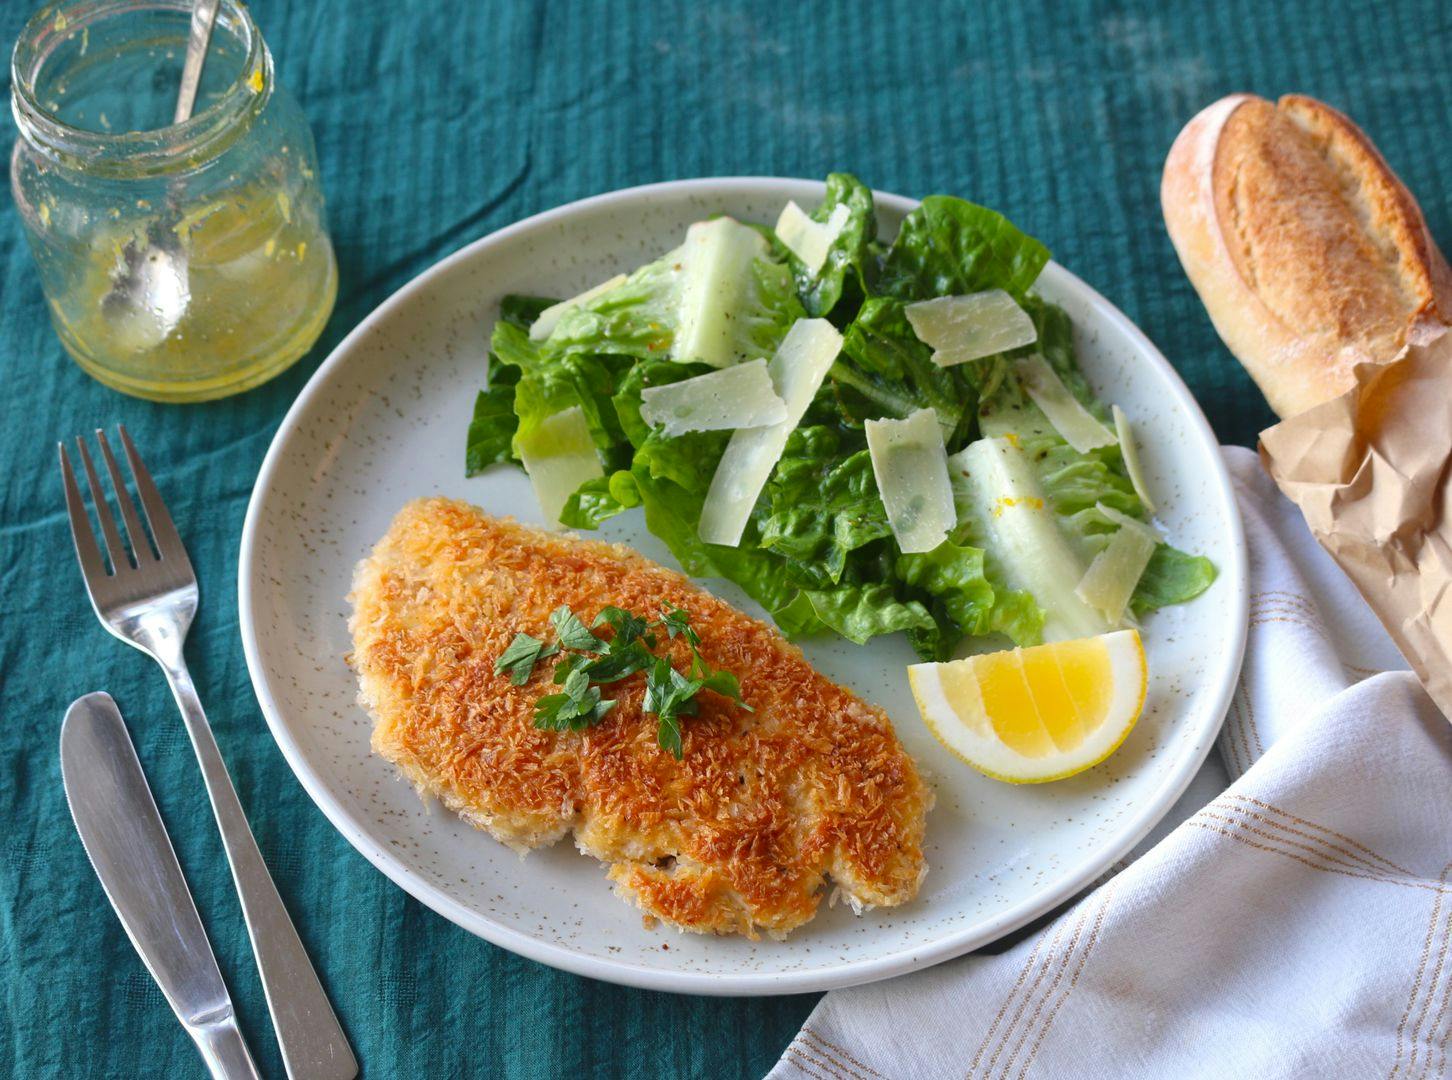 Crumbed chicken with zesty green salad